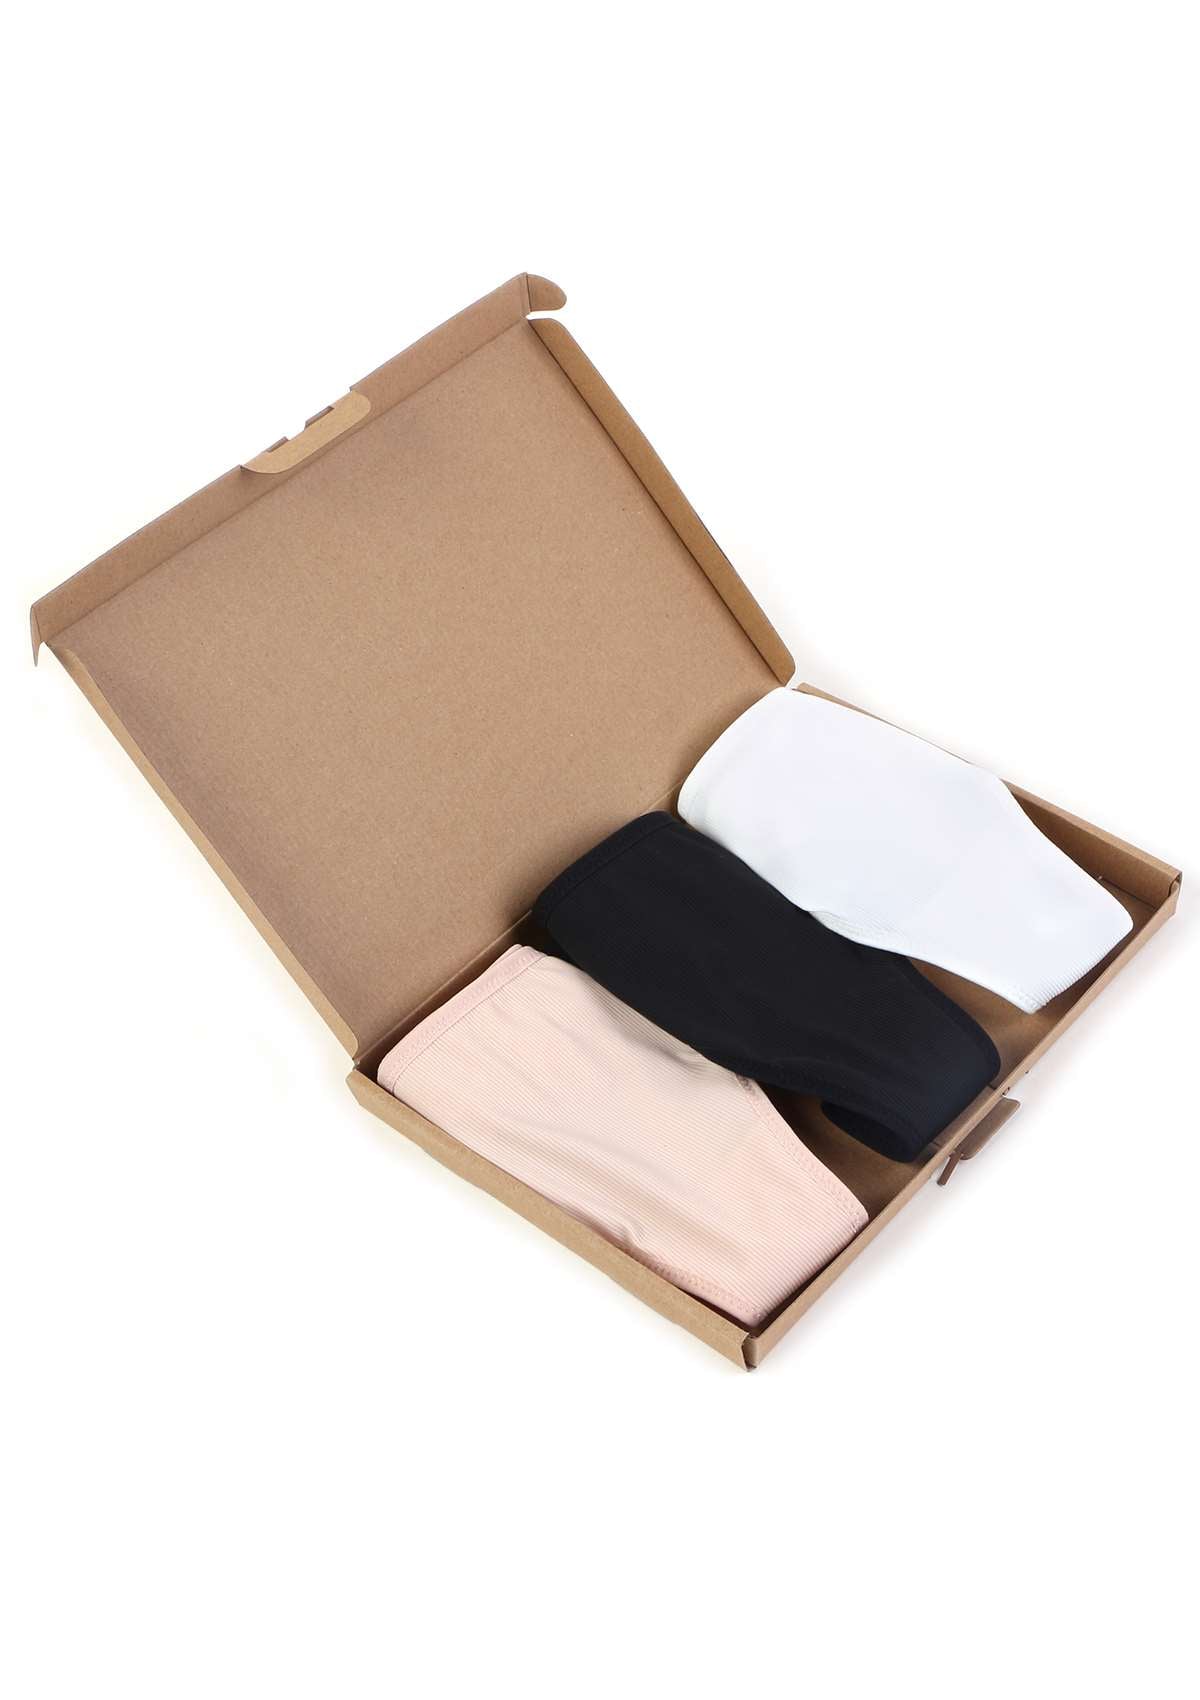 HSIA Ribbed Knit Cotton Thong Underwear 3 Pack - XXL / Black+White+Pink Beige